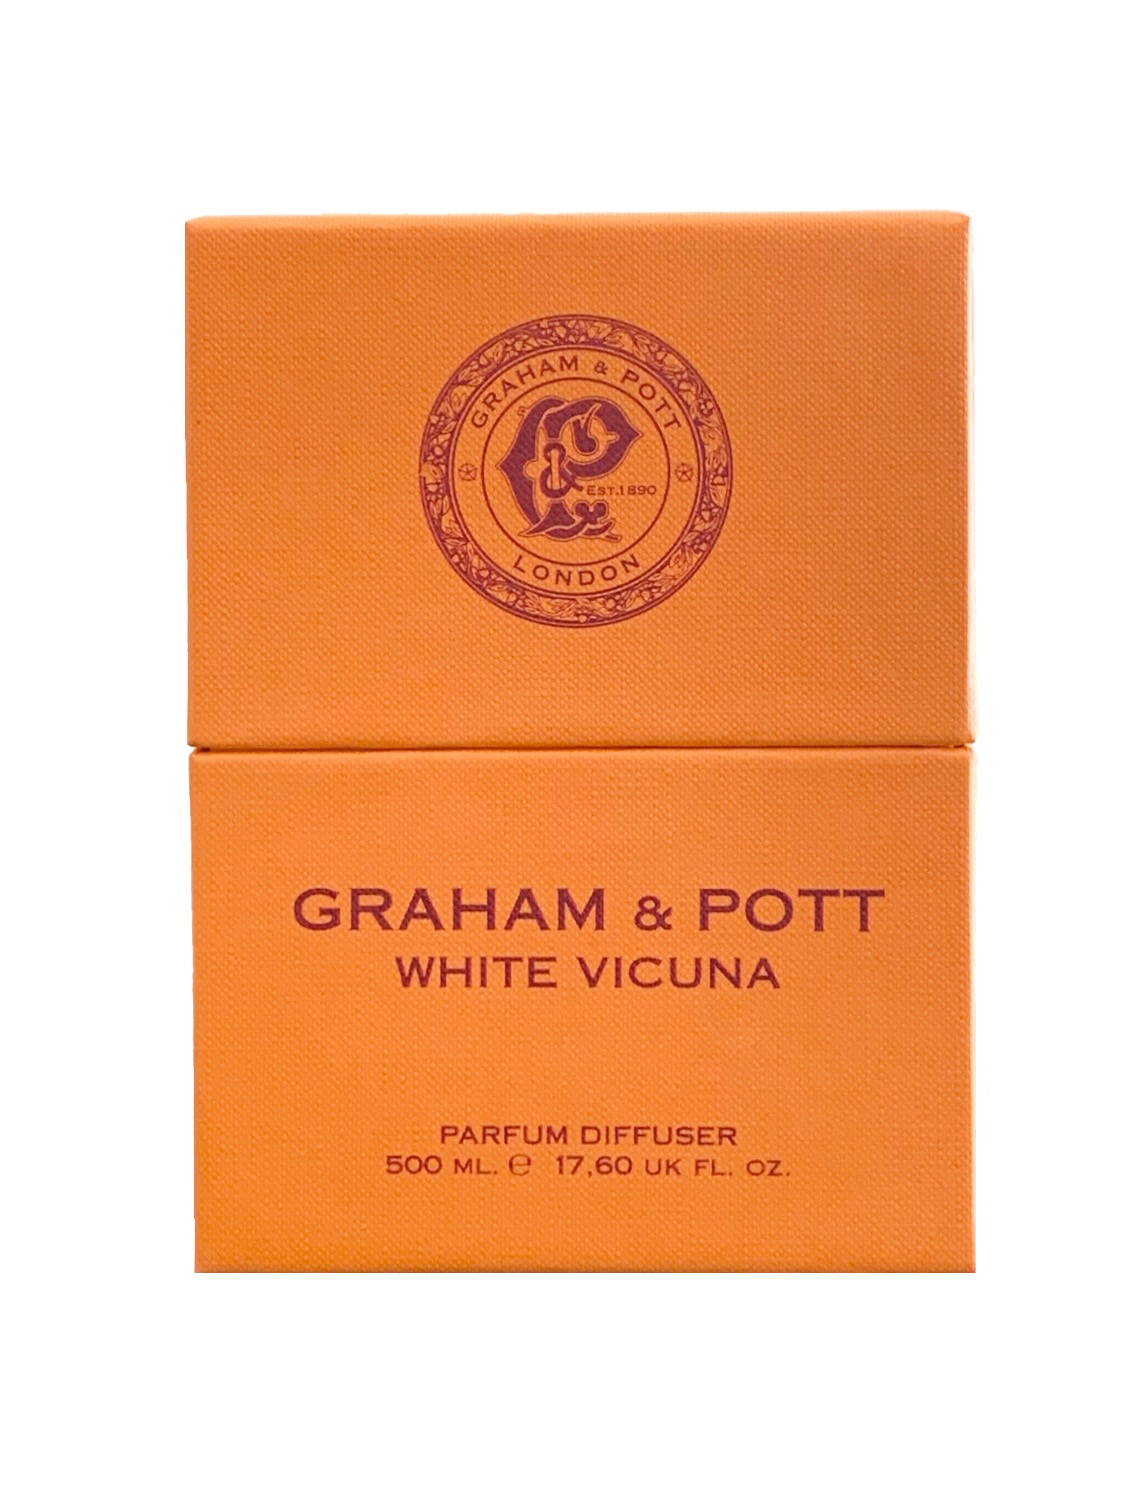 WHITE VICUNA Parfum Diffuser - GRAHAM & POTT